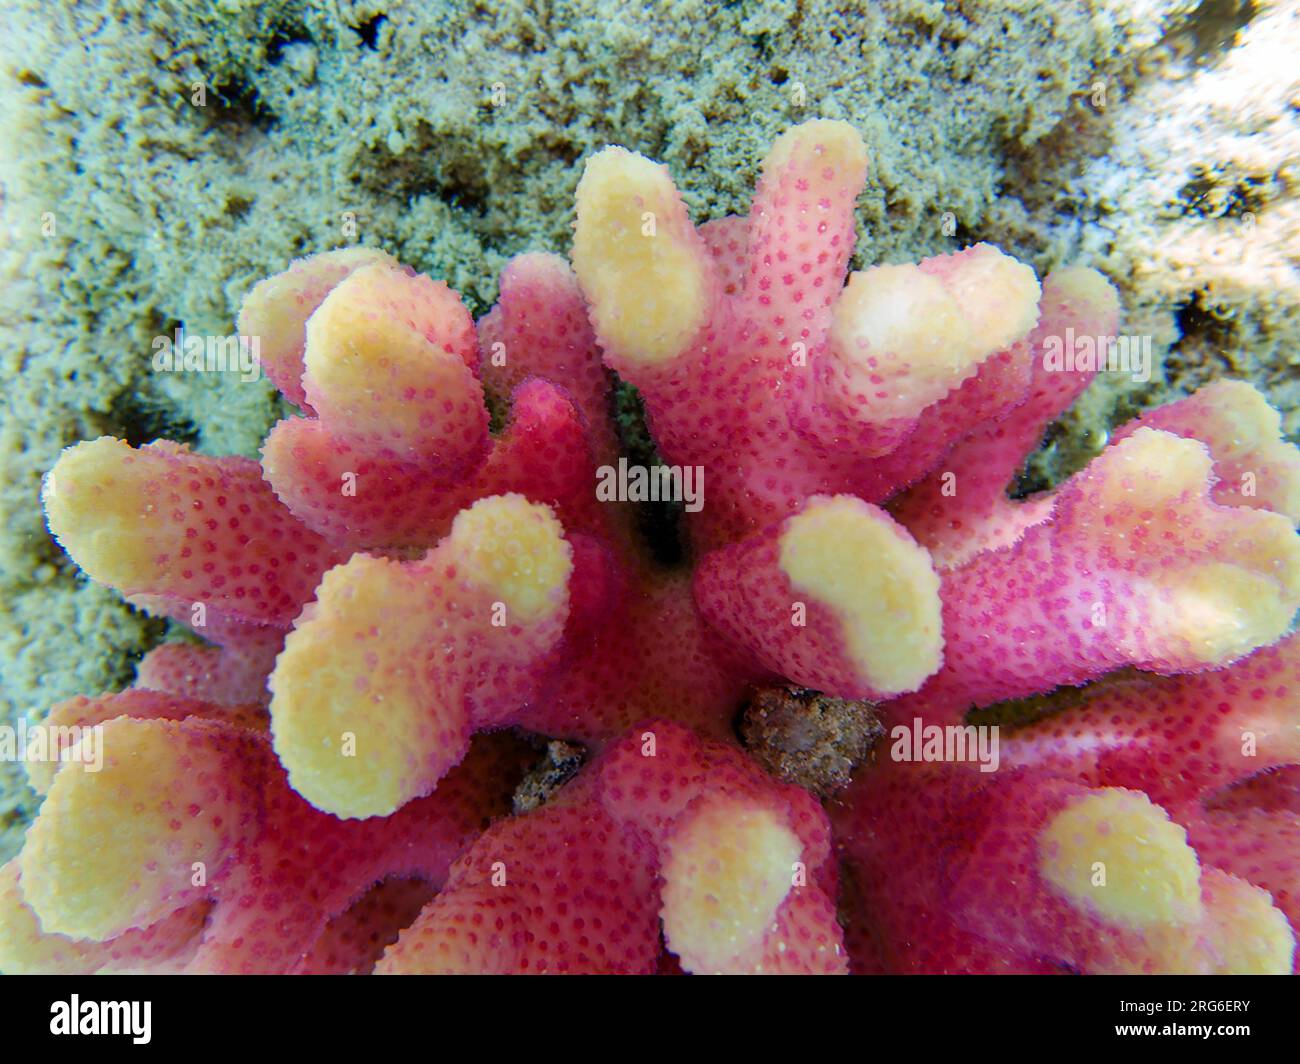 Pink cauliflower coral - Pocillopora sp. Stock Photo